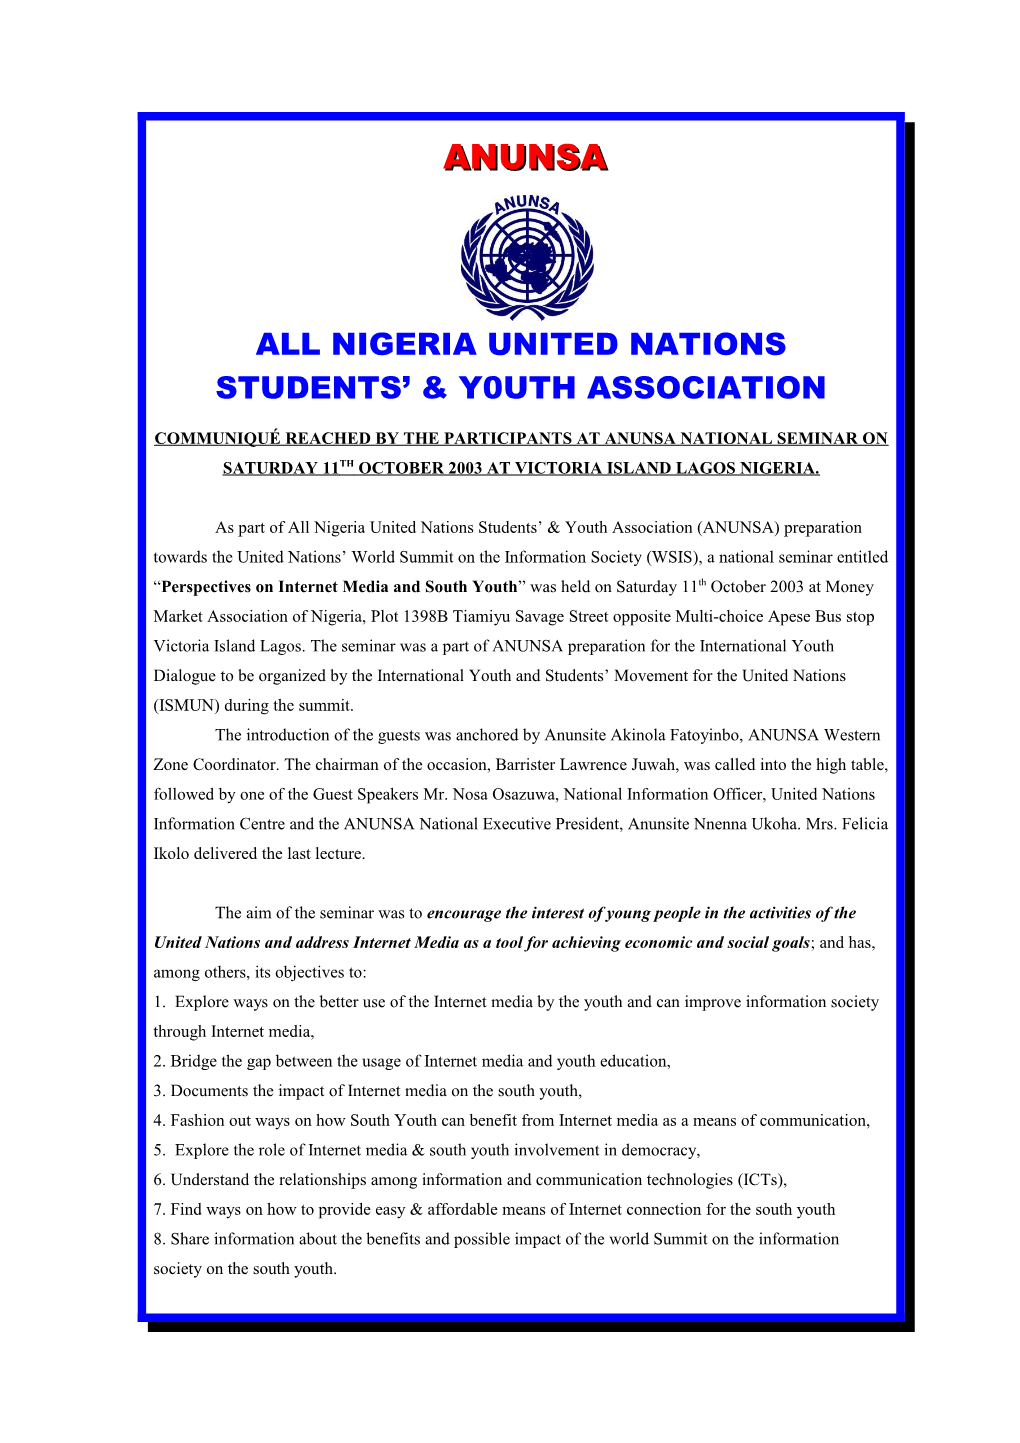 All Nigeria United Nations Students & Y0uth Association